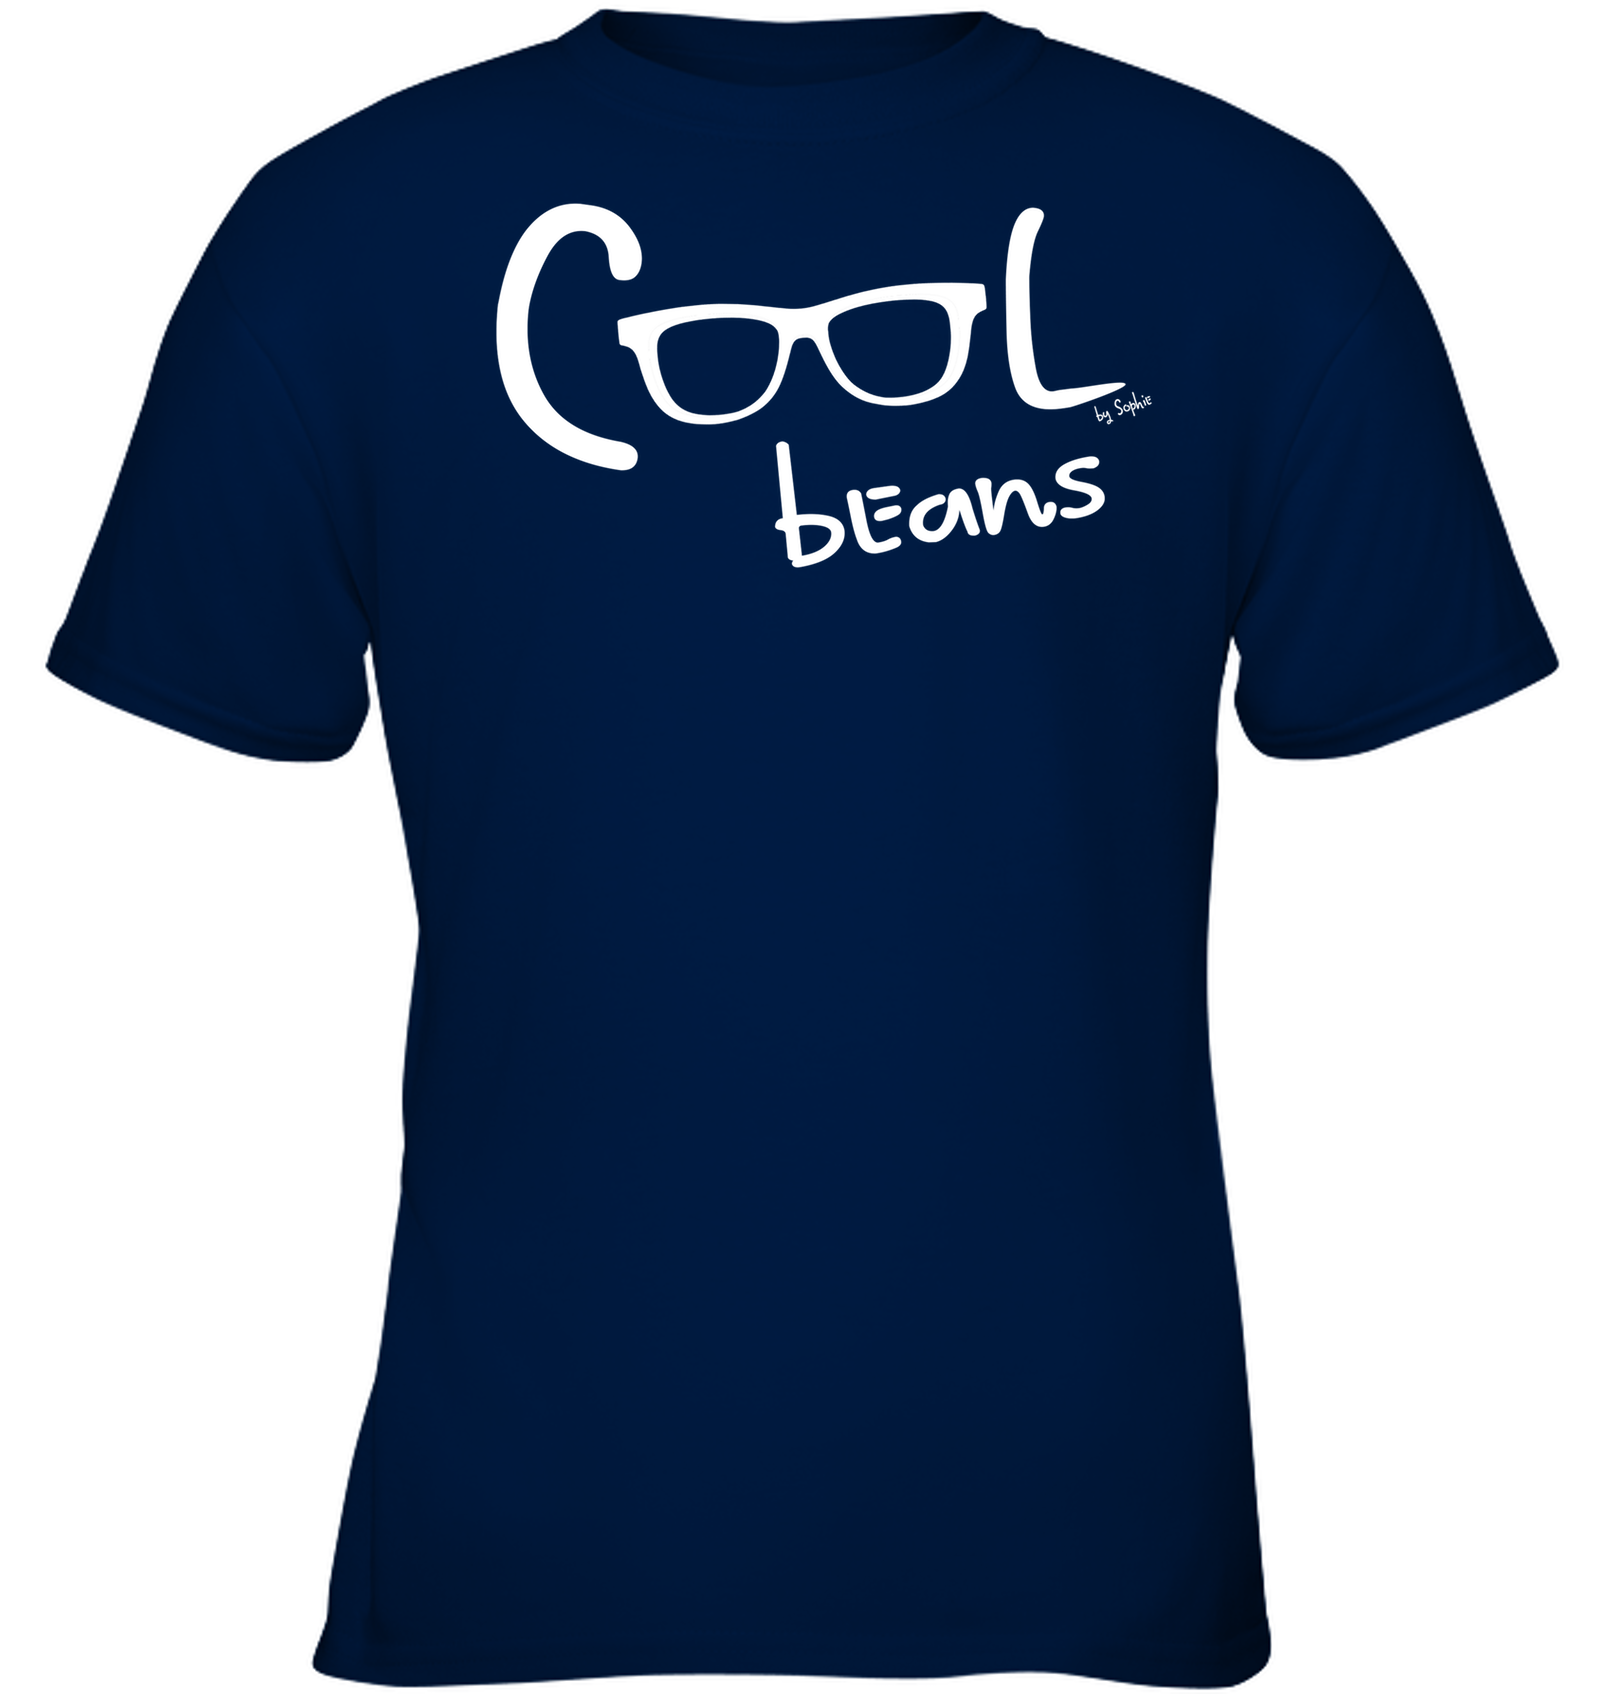 Cool Beans - White - Gildan Youth Short Sleeve T-Shirt